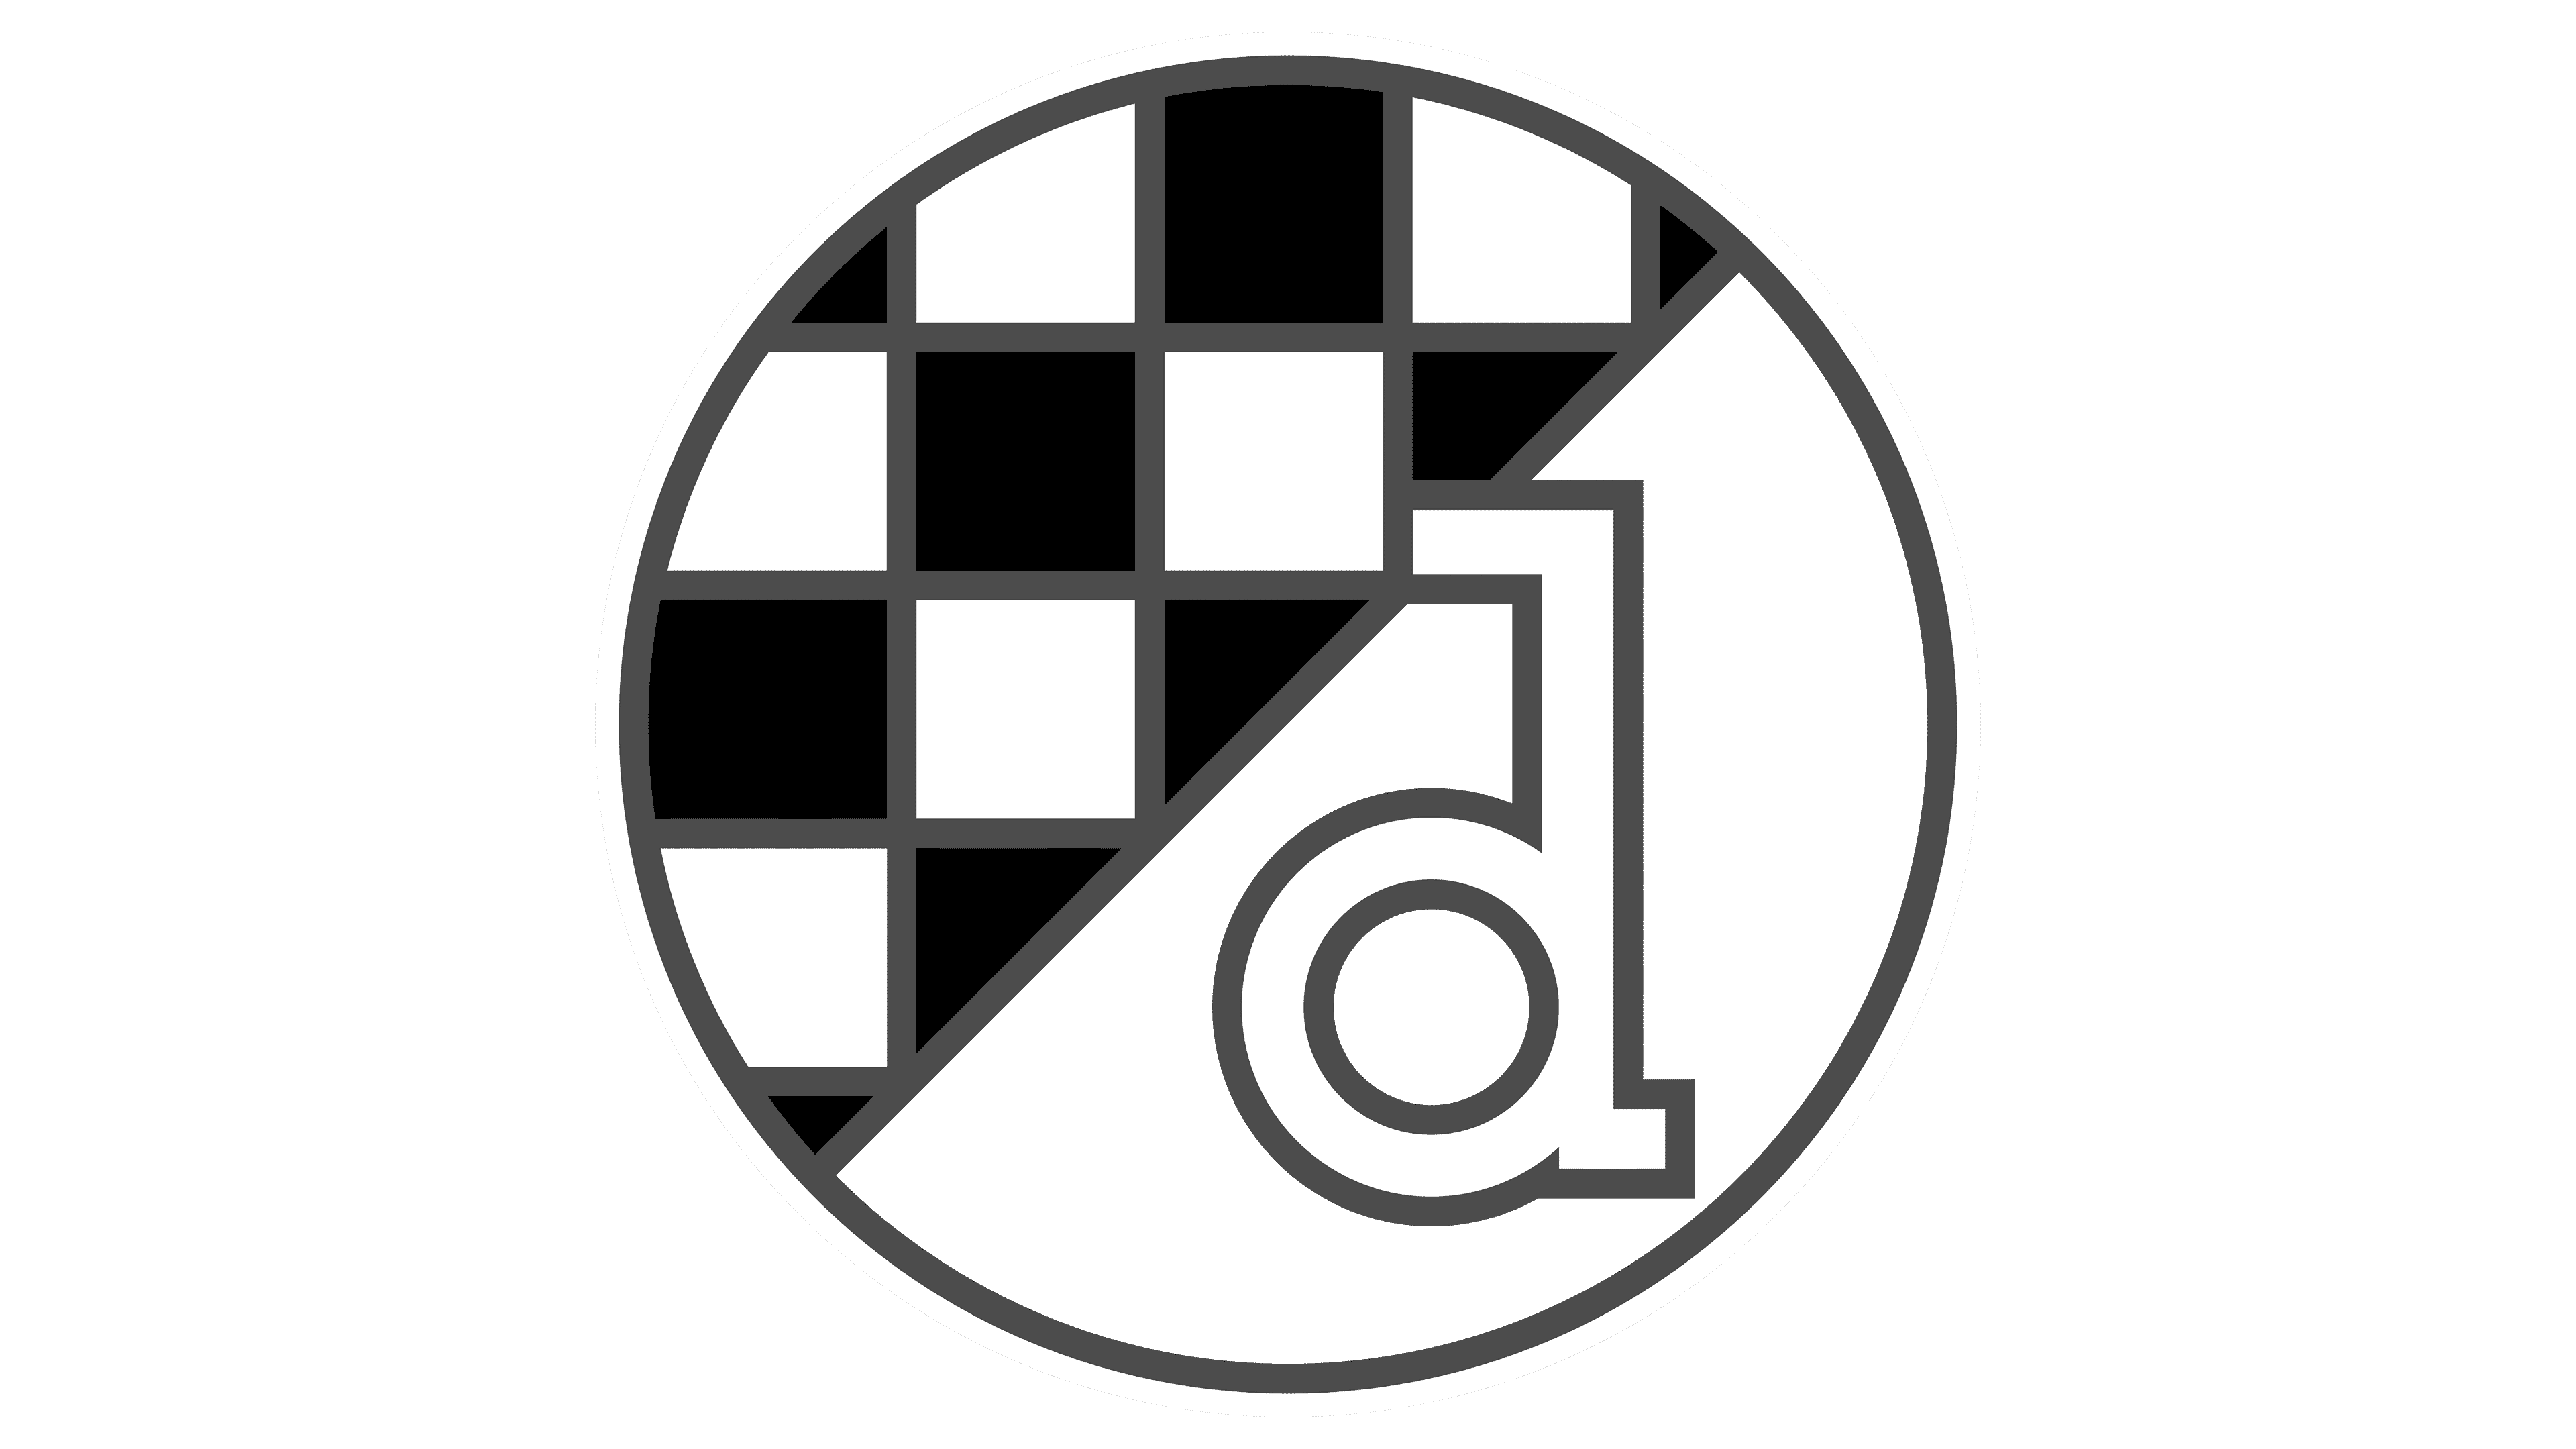 Dinamo Zagreb Logo, symbol, meaning, history, PNG, brand